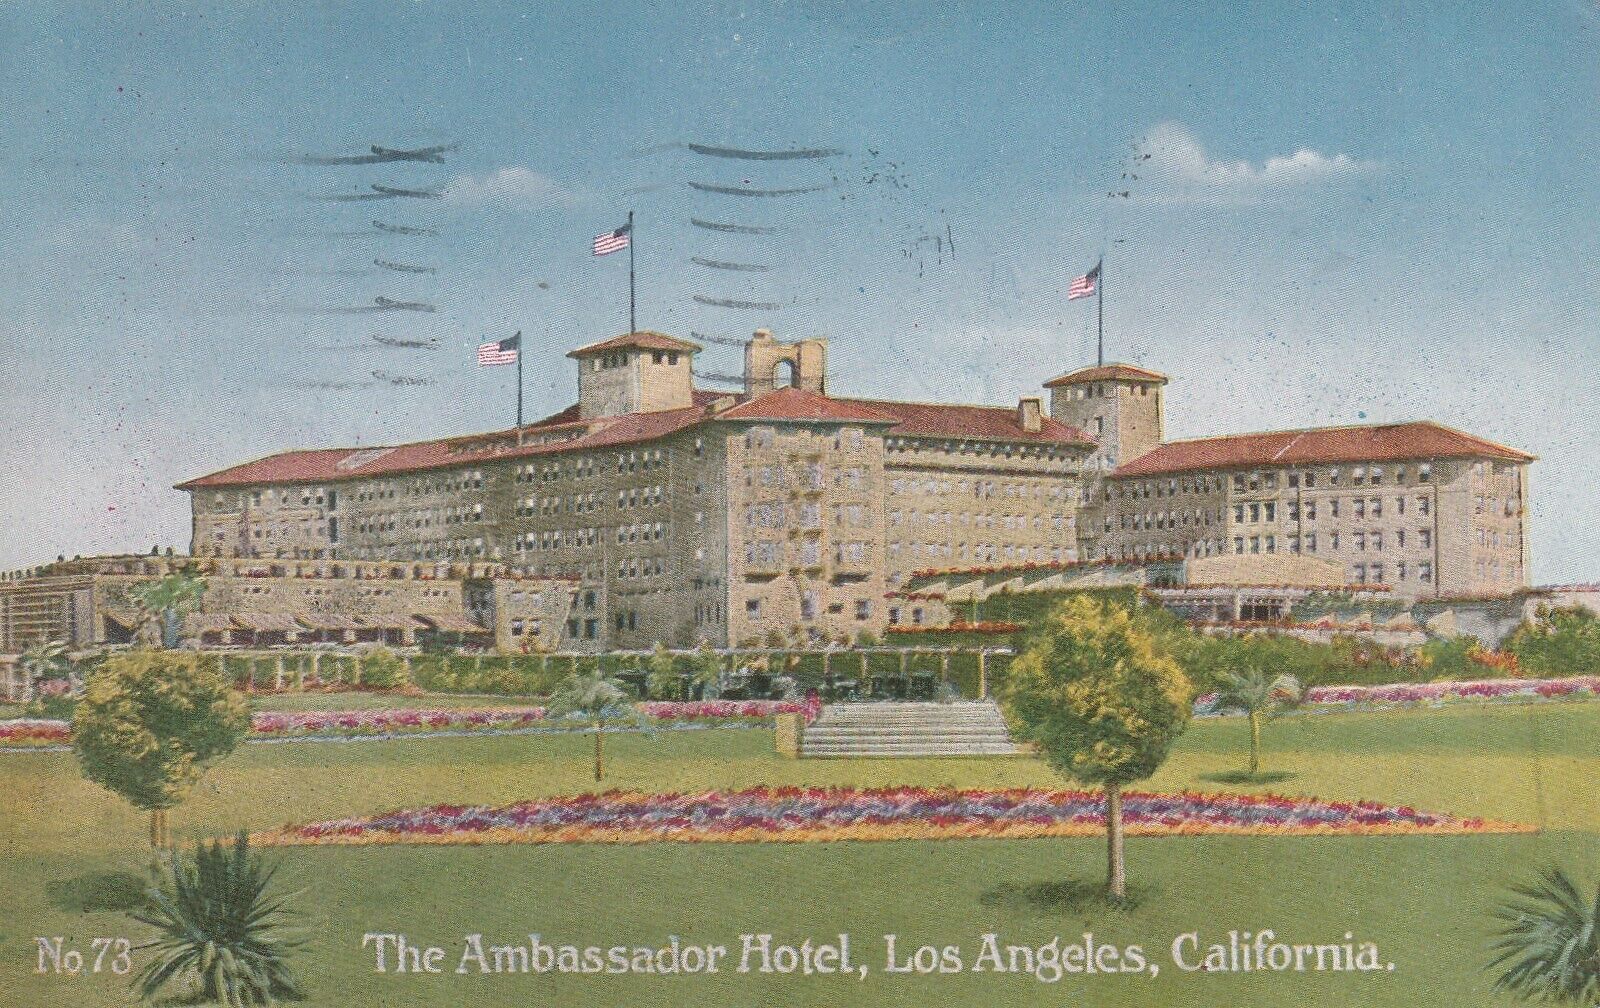 1927 The Ambassador Hotel, Los Angeles, California, Arcade Sta. Postmark, a632